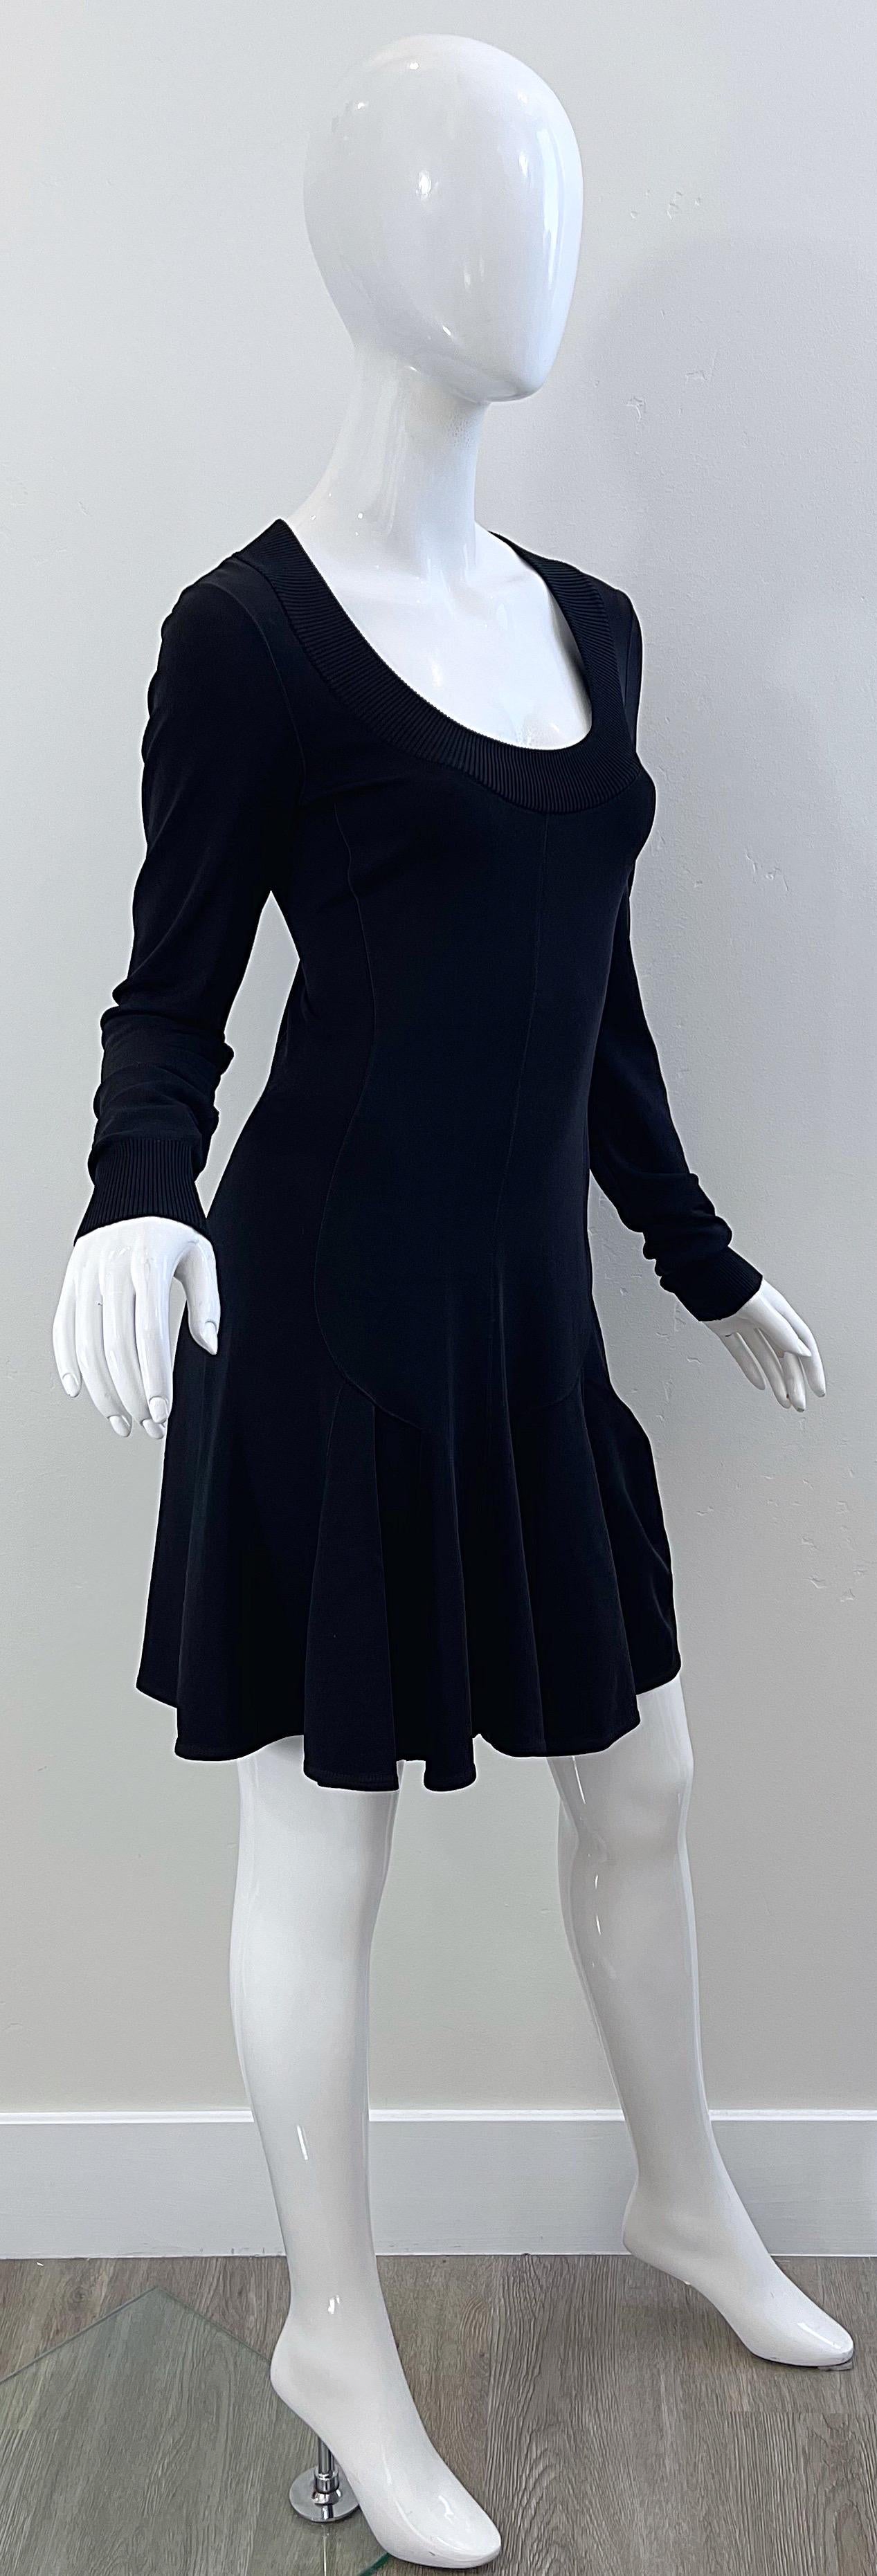 Azzedine Alaia 1990s Black Bodcon Long Sleeve Sz Medium Vintage 90s Skater Dress For Sale 2